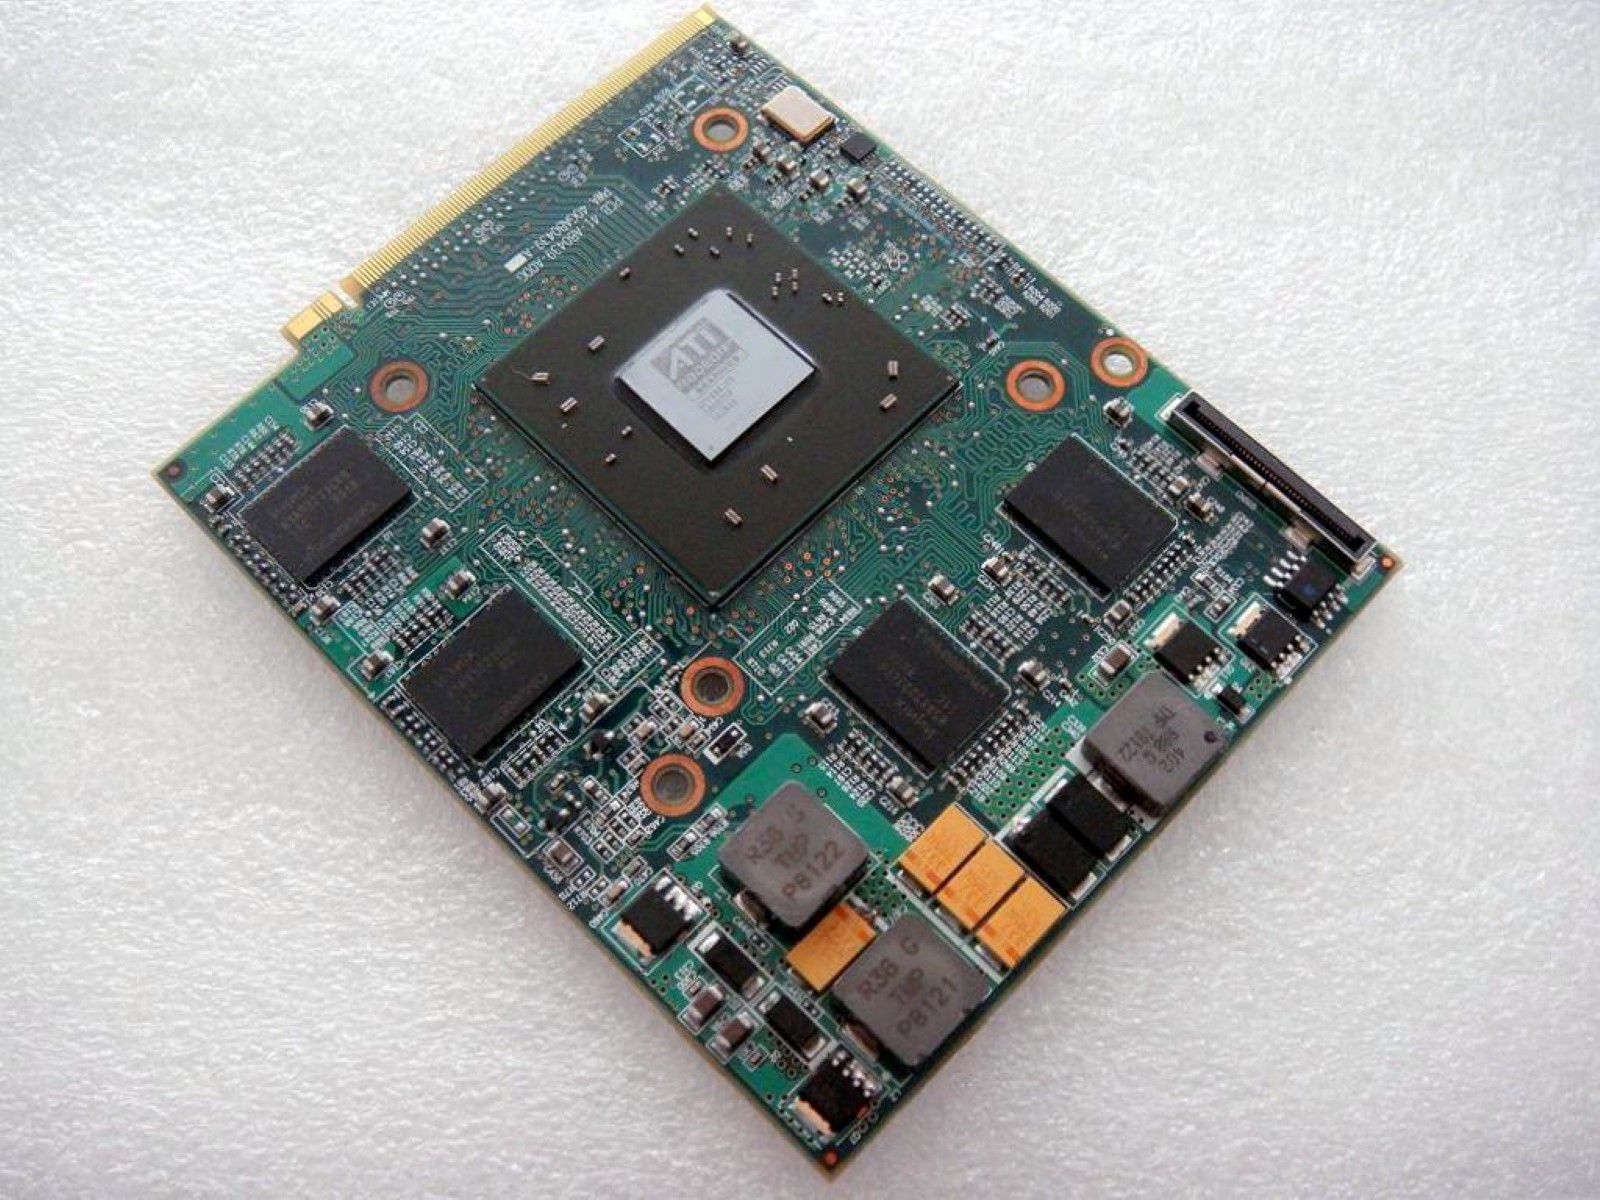 ATI HD 3850 MXM Card